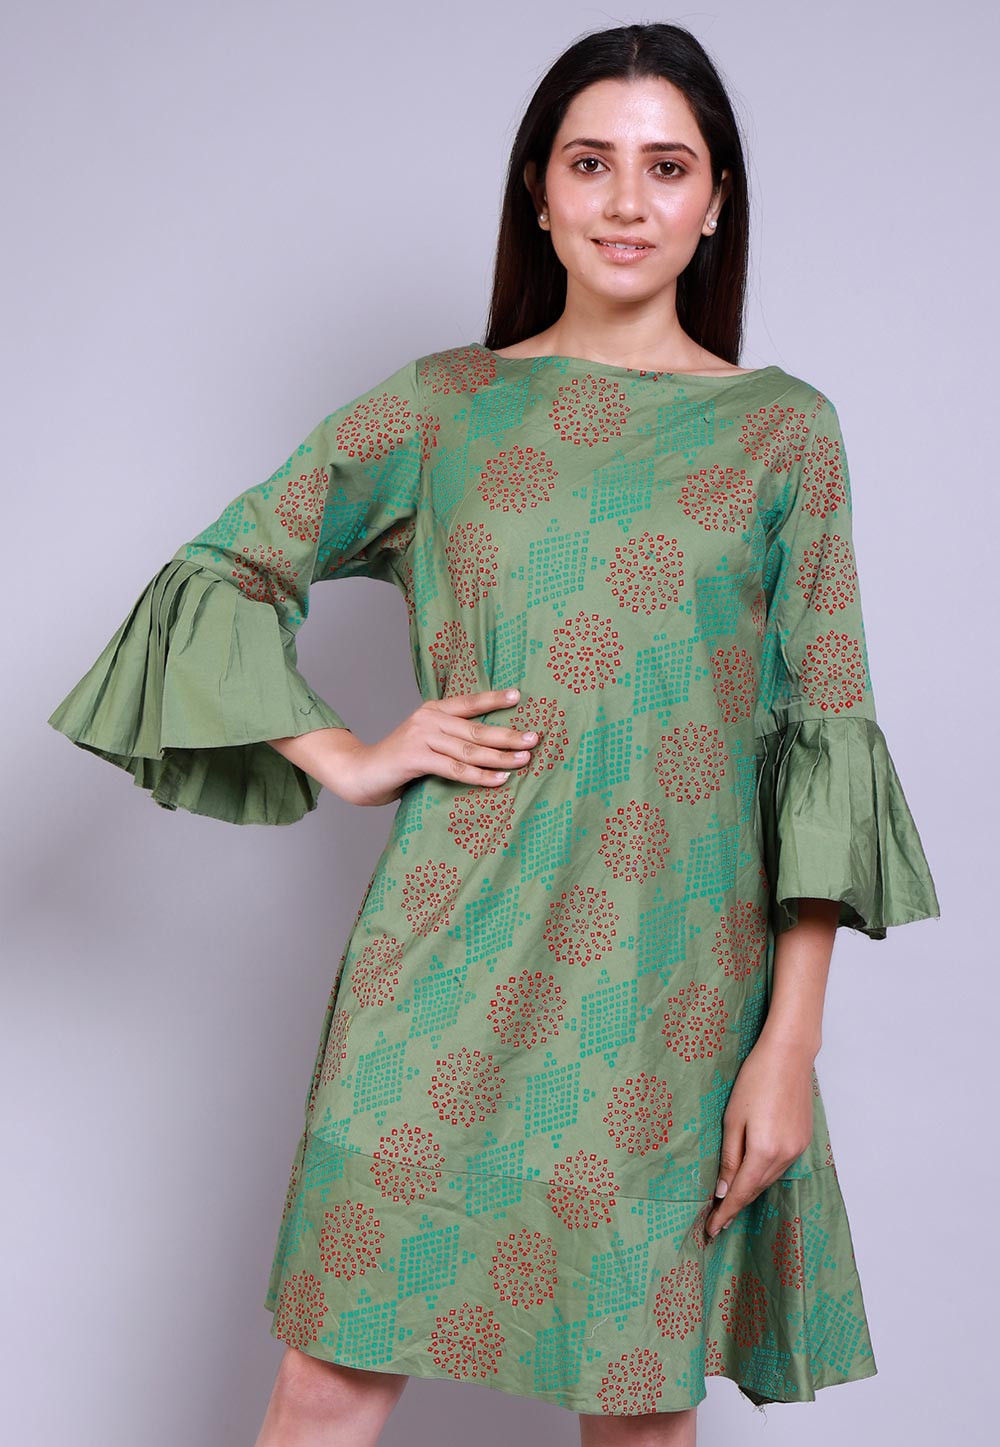 Hand Block Printed Cotton Silk Sheath Dress in Dusty Green : TJW1825